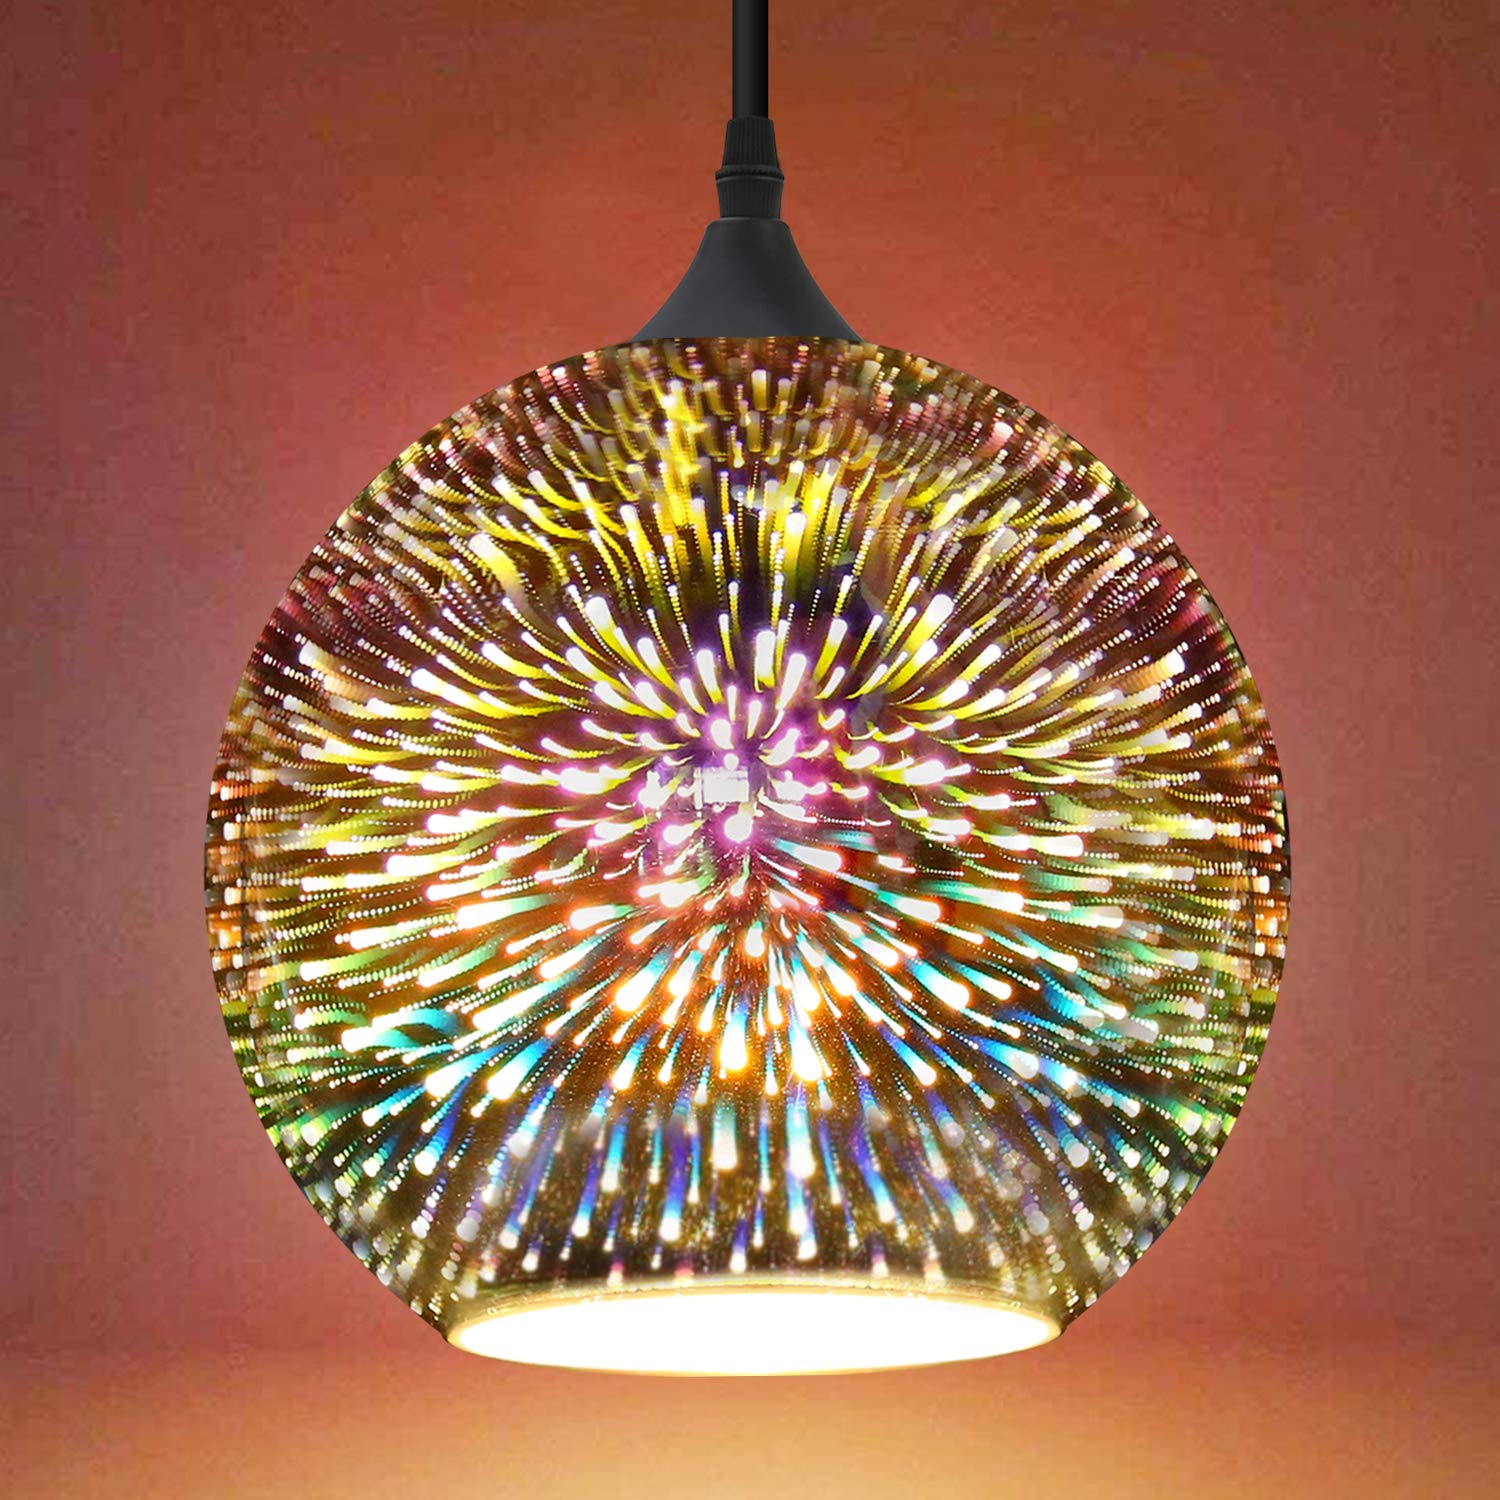 FRIDEKO HOME Industrial Modern 3D Colourfull Glass Pendant Light 7.9 inches Firework Globe Ball Style Hanging Lamp Creative Lighting Fixture for Island Kitchen Dining Room use E26 Bulb